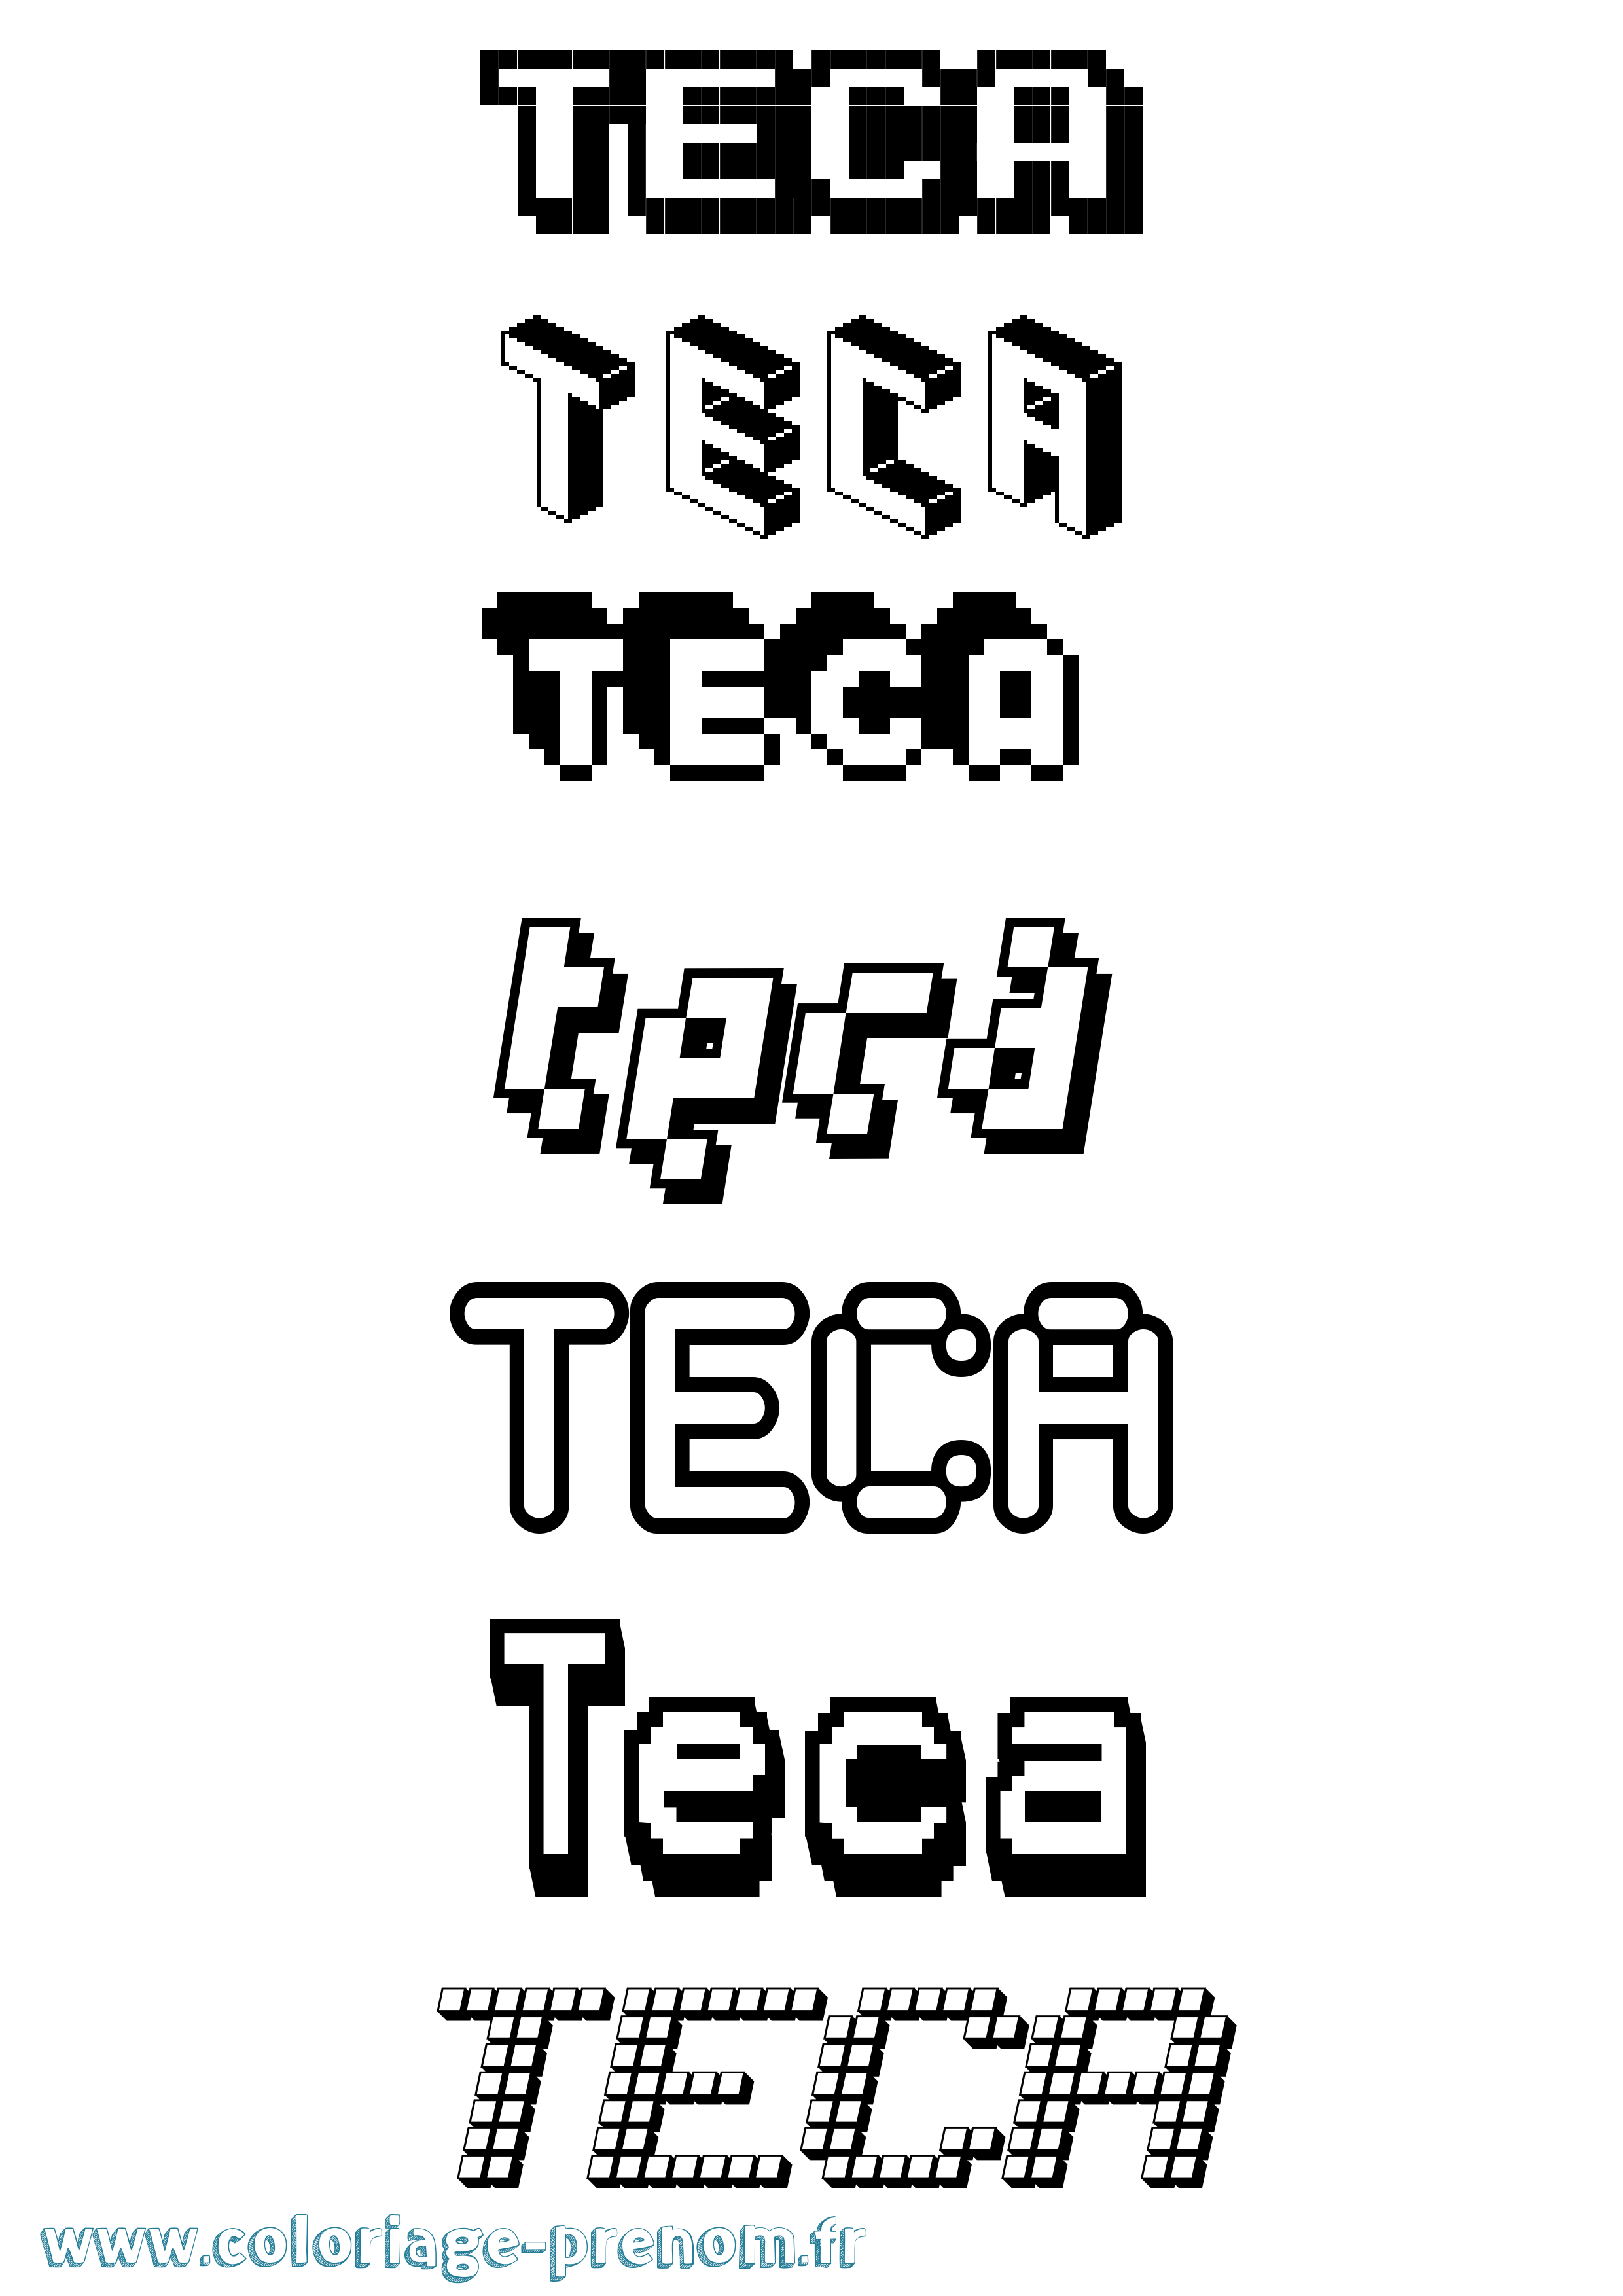 Coloriage prénom Teca Pixel